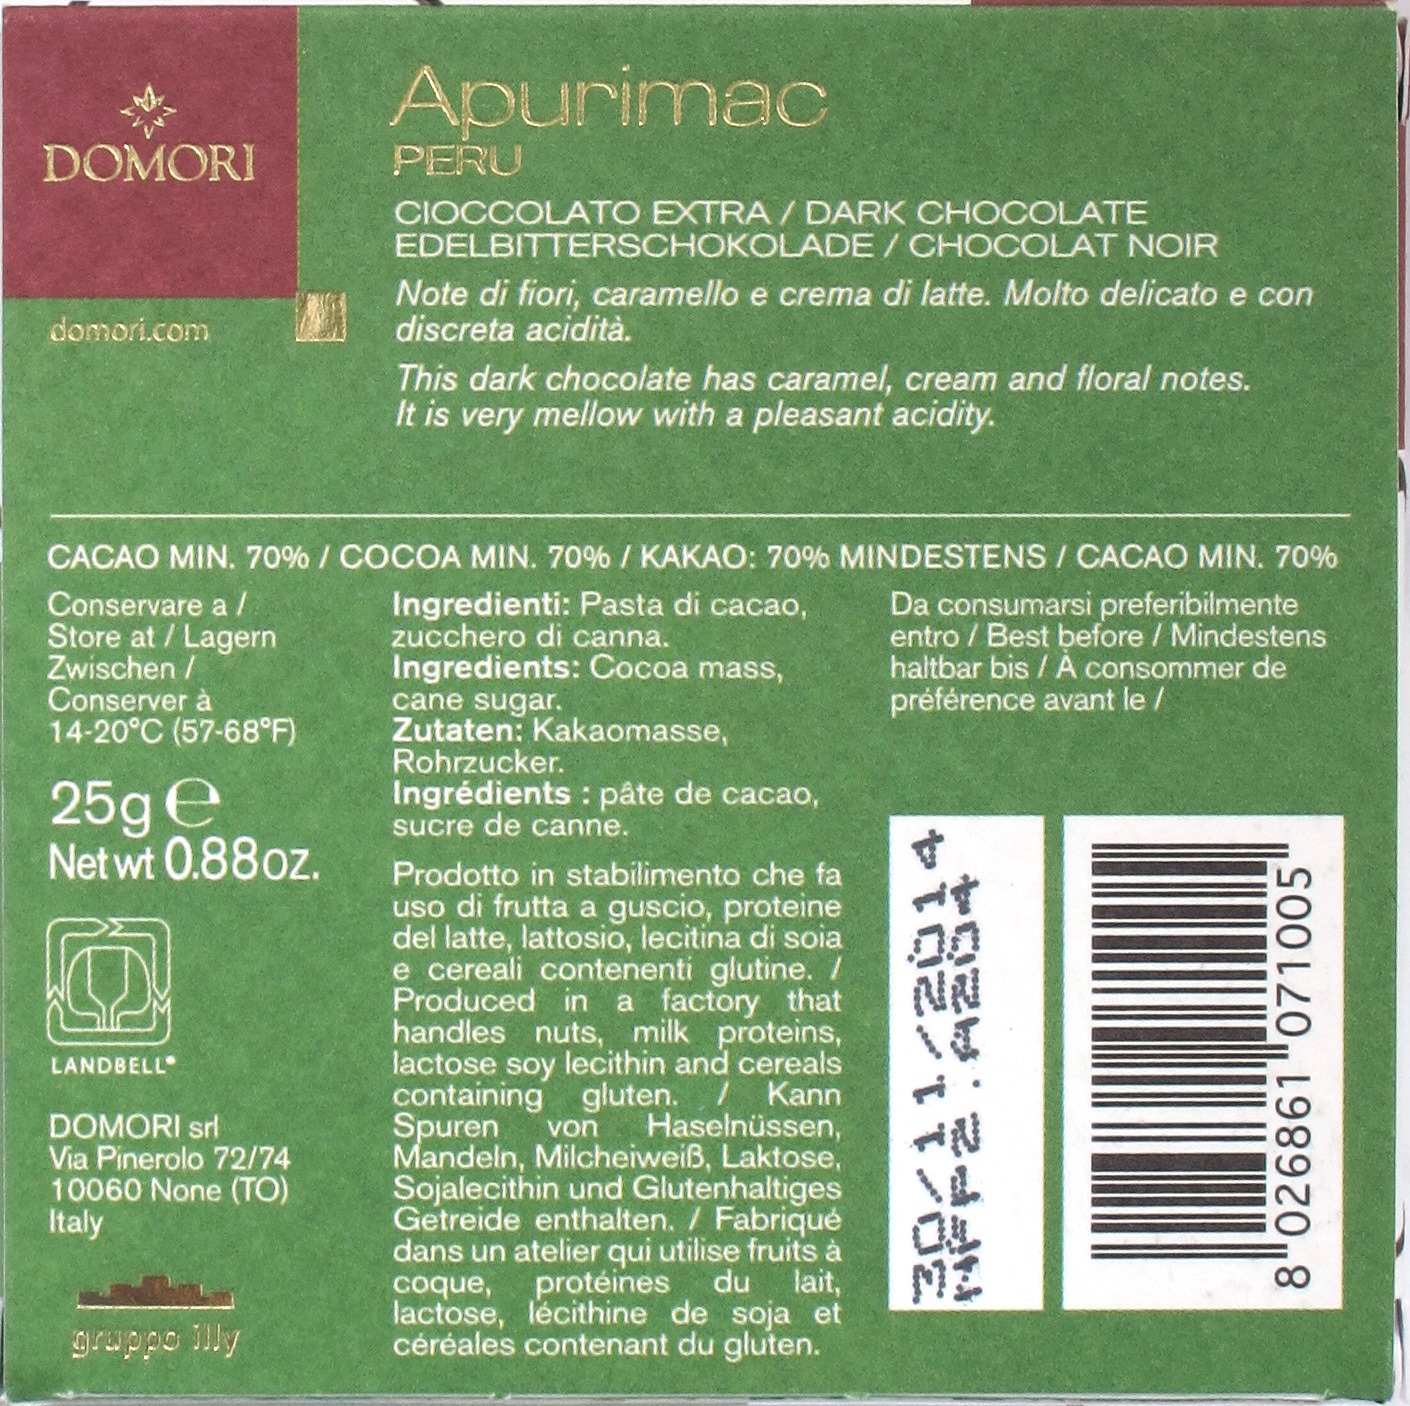 'Apurimac' - Domori Bitterschokolade - Rückseite